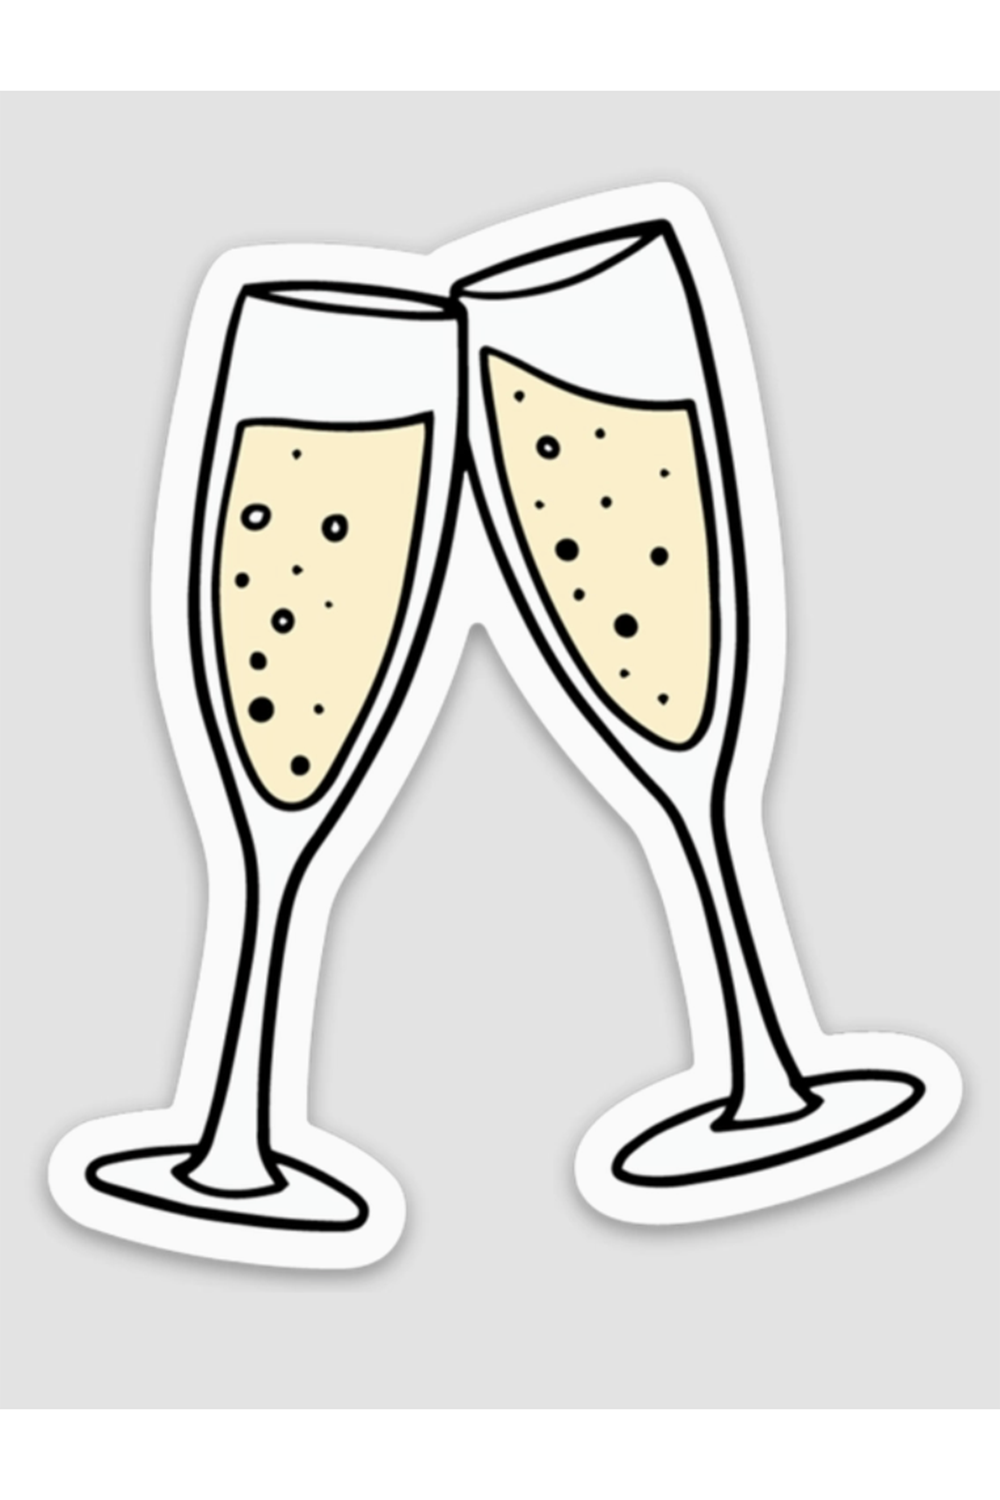 Trendy Sticker - Champagne Glasses